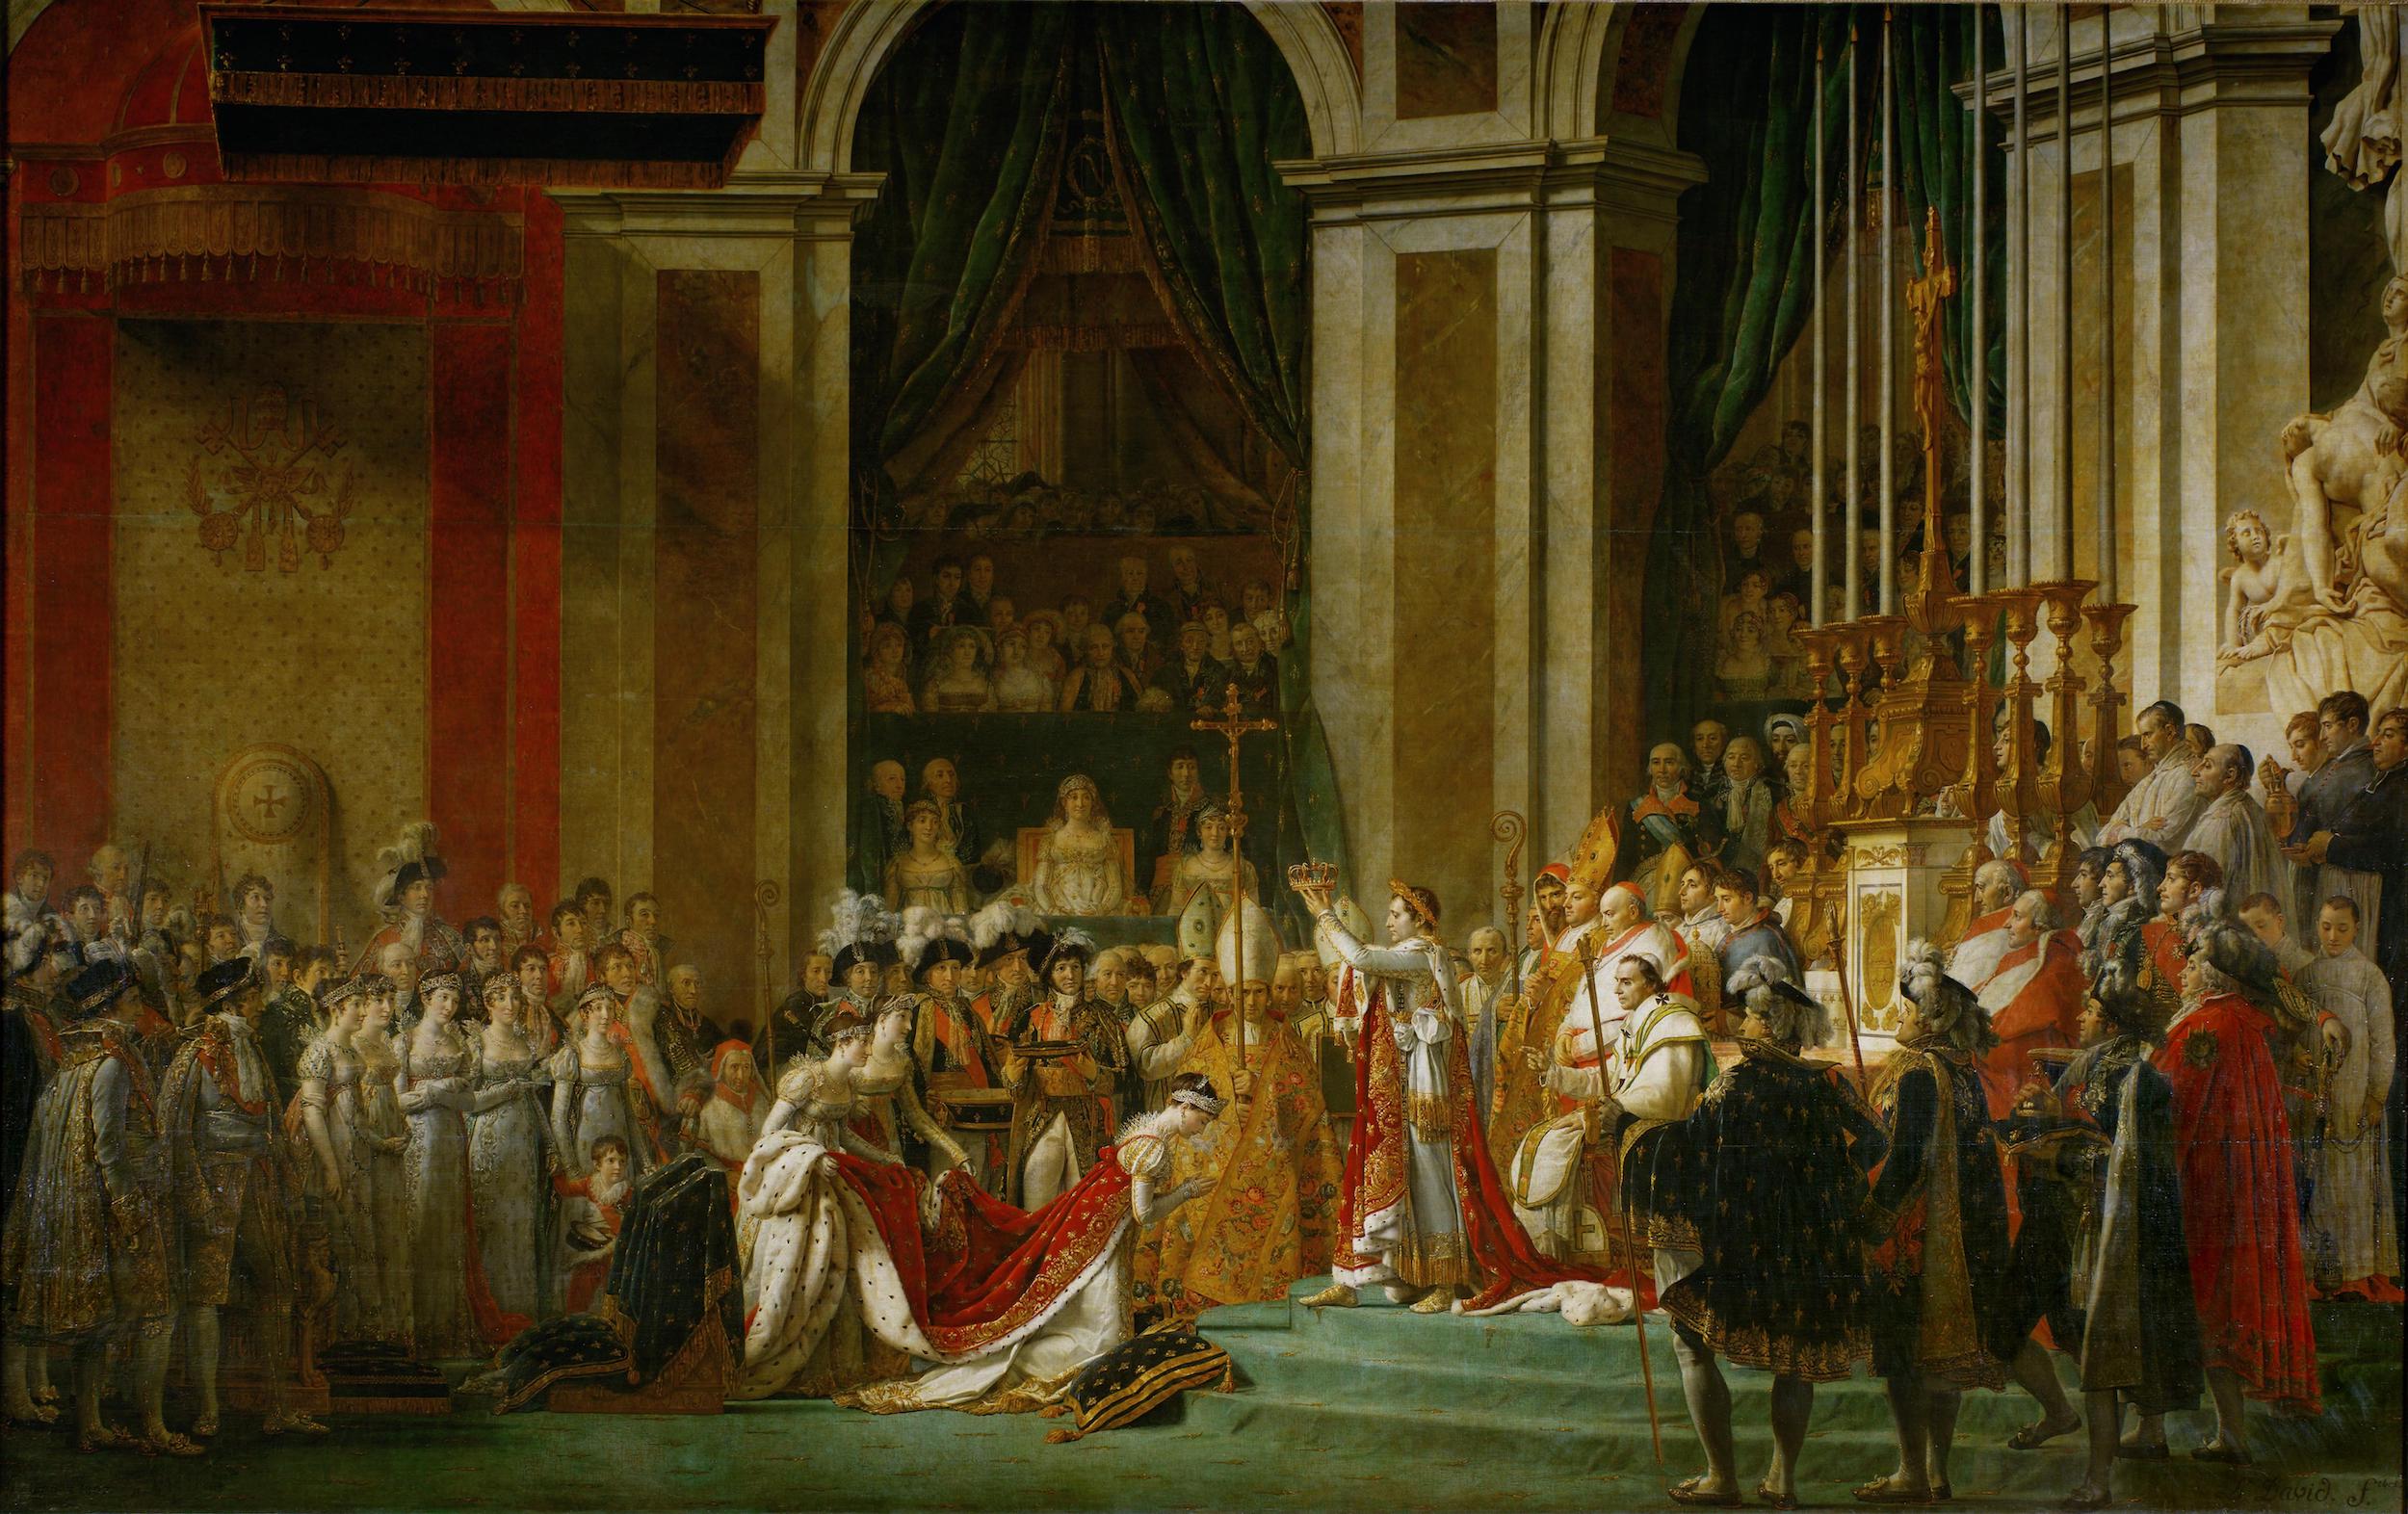 De kroning van keizer Napoleon I en de bekroning van keizerin Joséphine by Jacques-Louis David - 1806-1807 - 6,21 x 9.79 m 